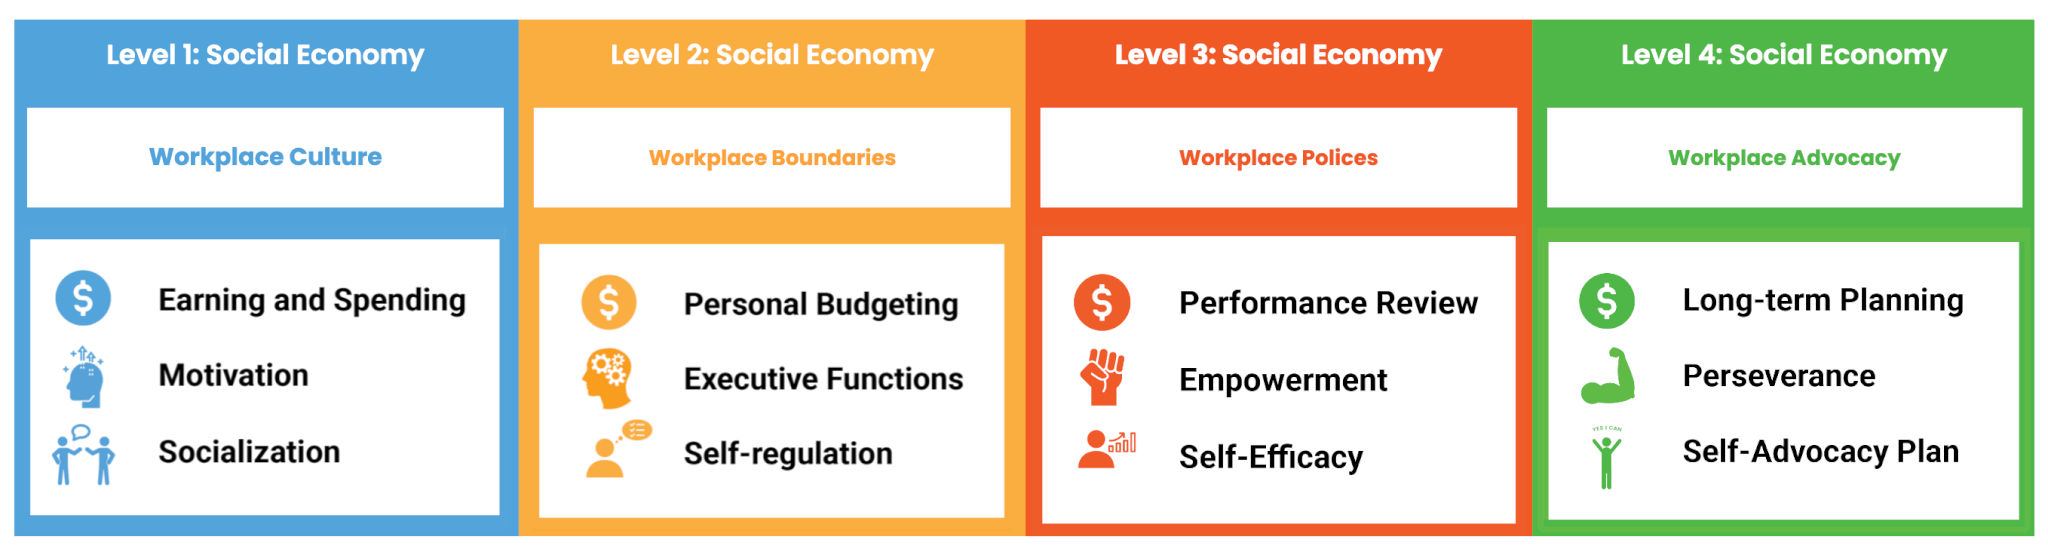 4 Levels social economy